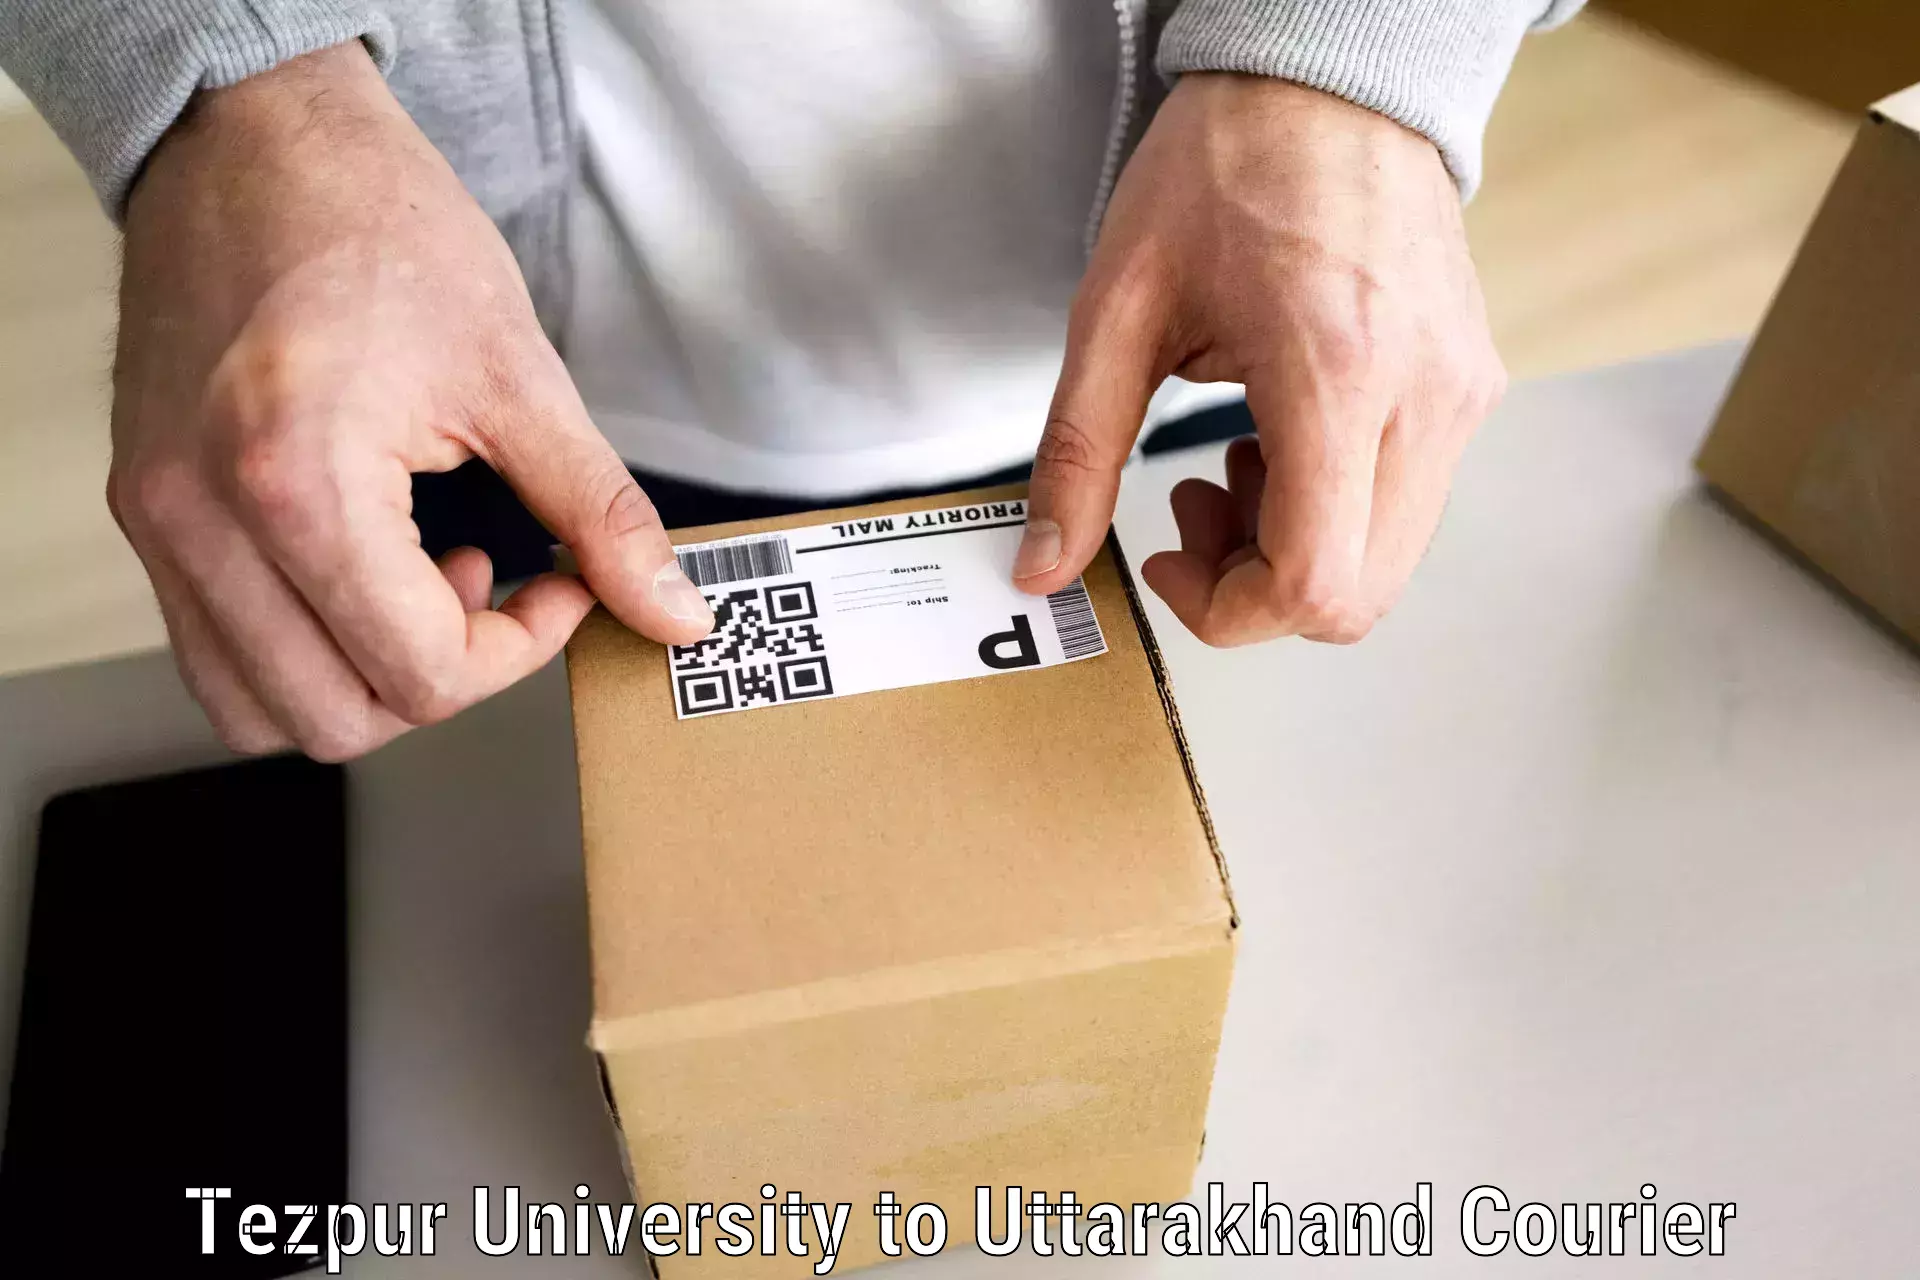 Professional packing services Tezpur University to Dehradun